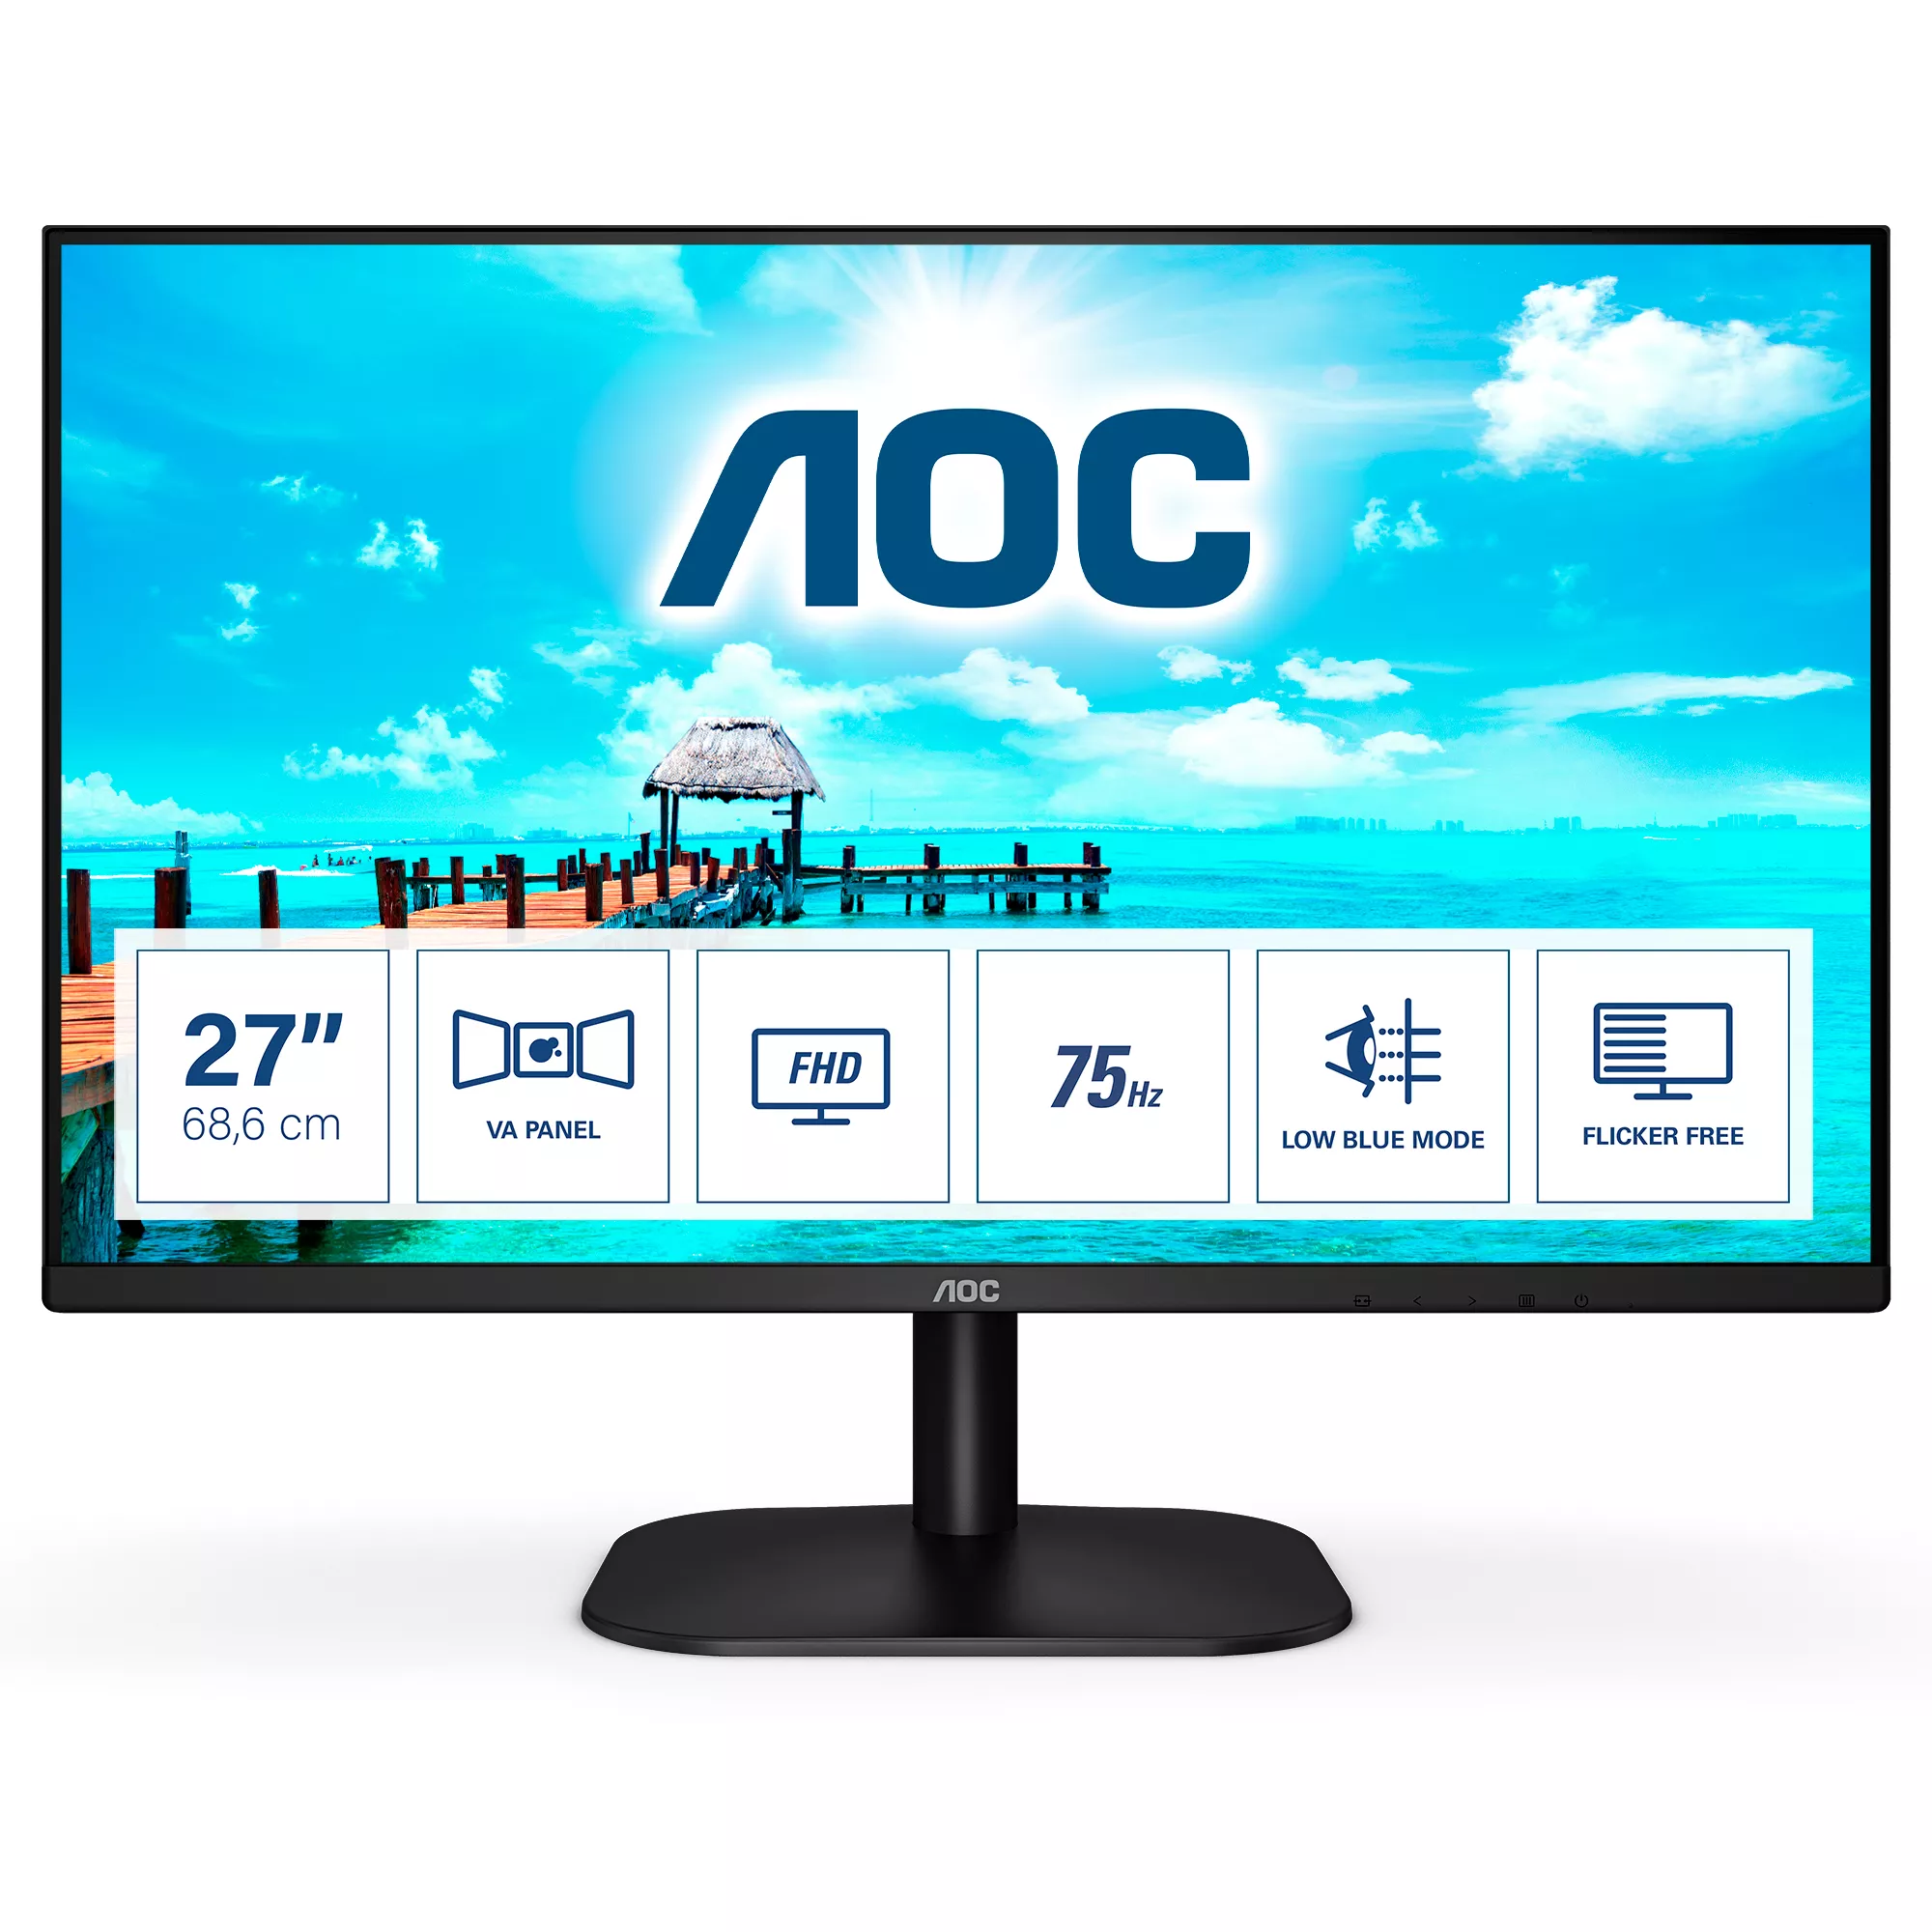 Achat AOC 27B2DM 27p monitor HDMI VGA DVI et autres produits de la marque AOC